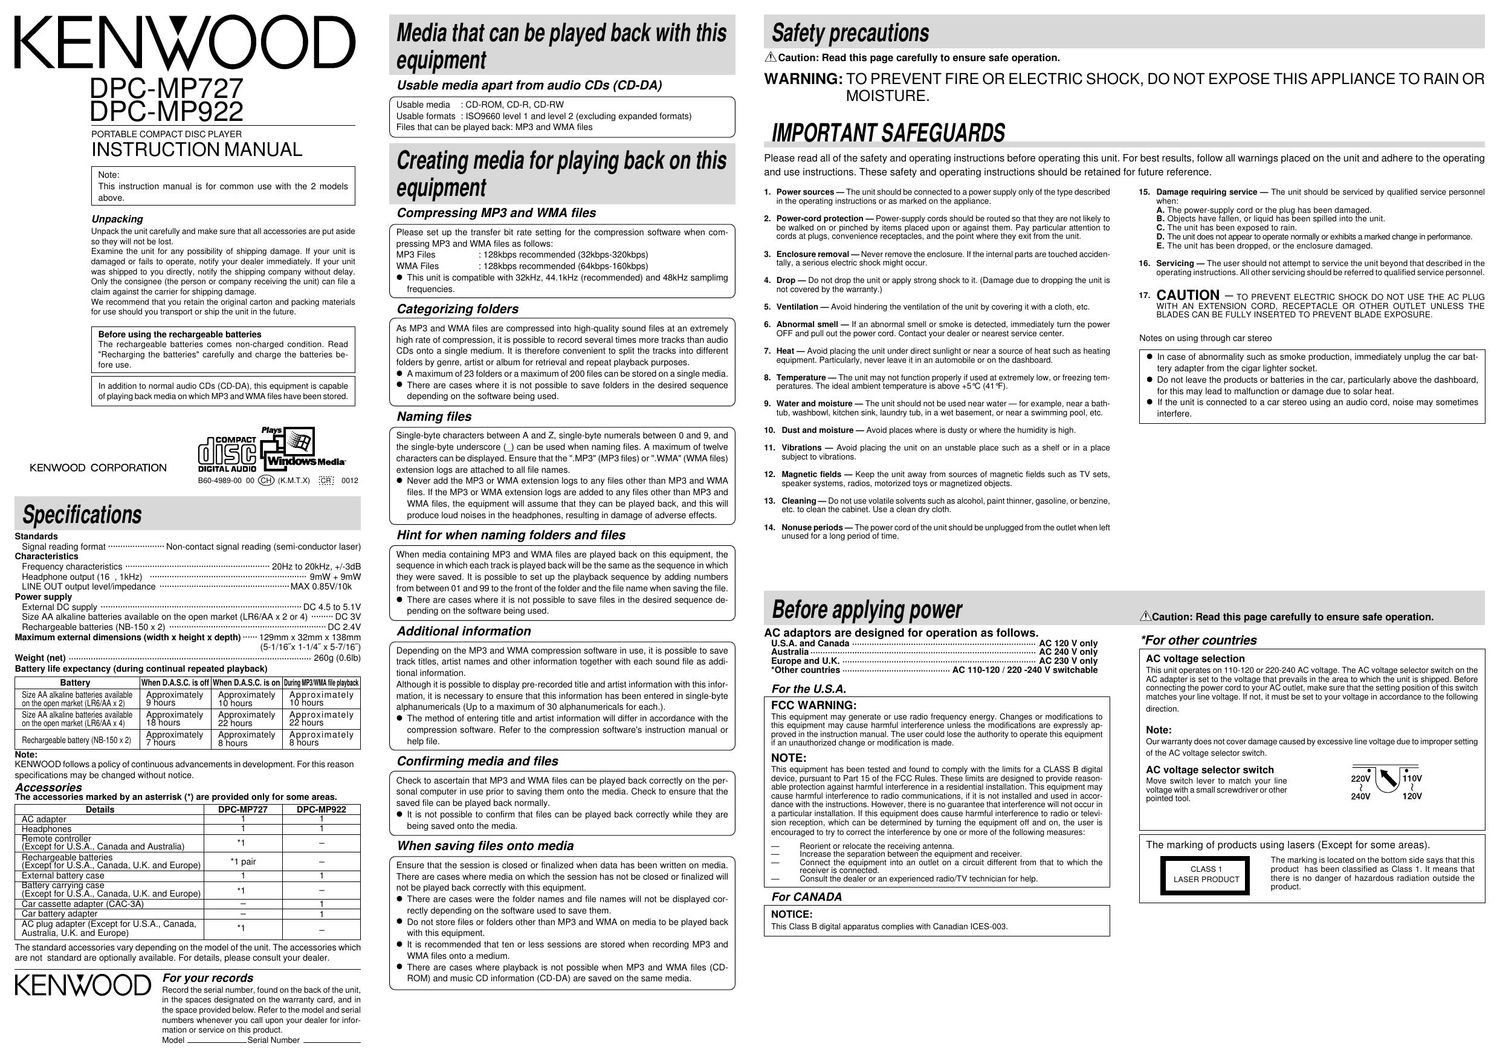 Kenwood DPCMP 922 Owners Manual